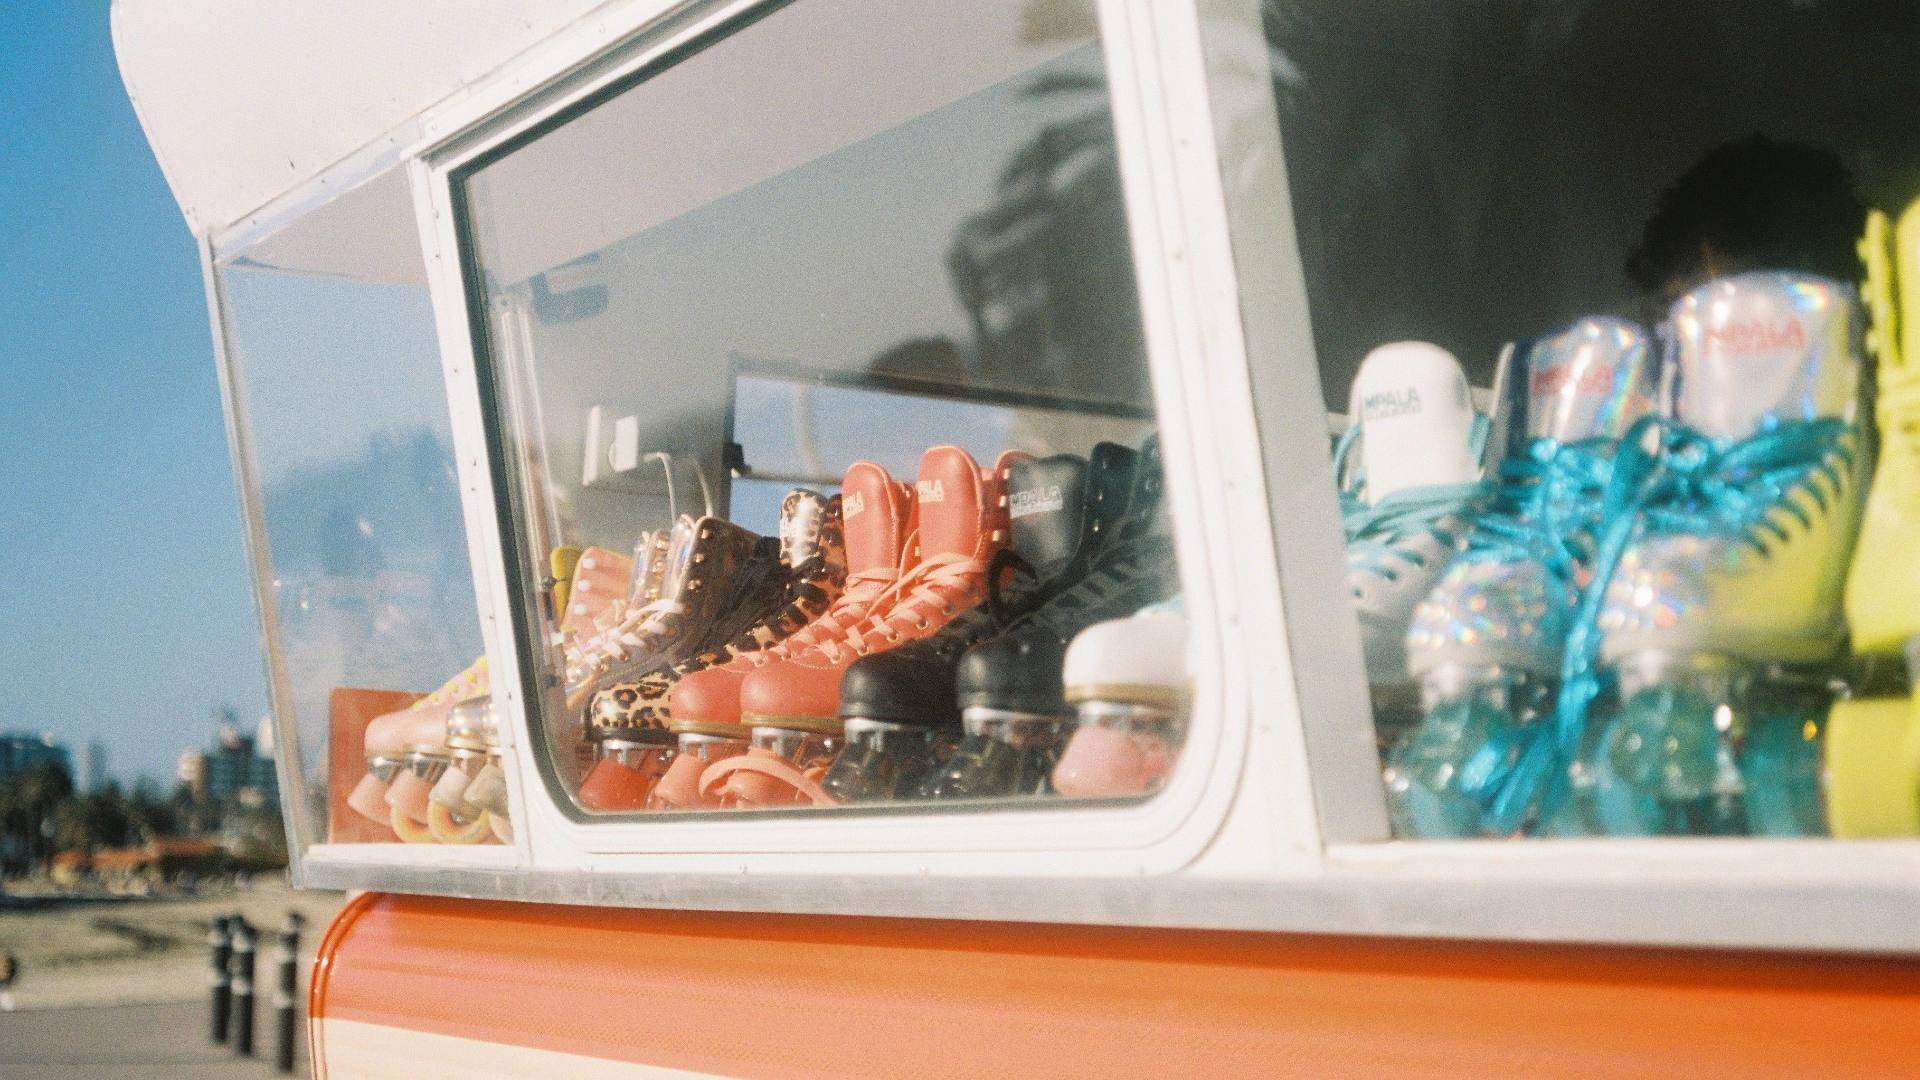 Row of roller skates through the window of a caravan